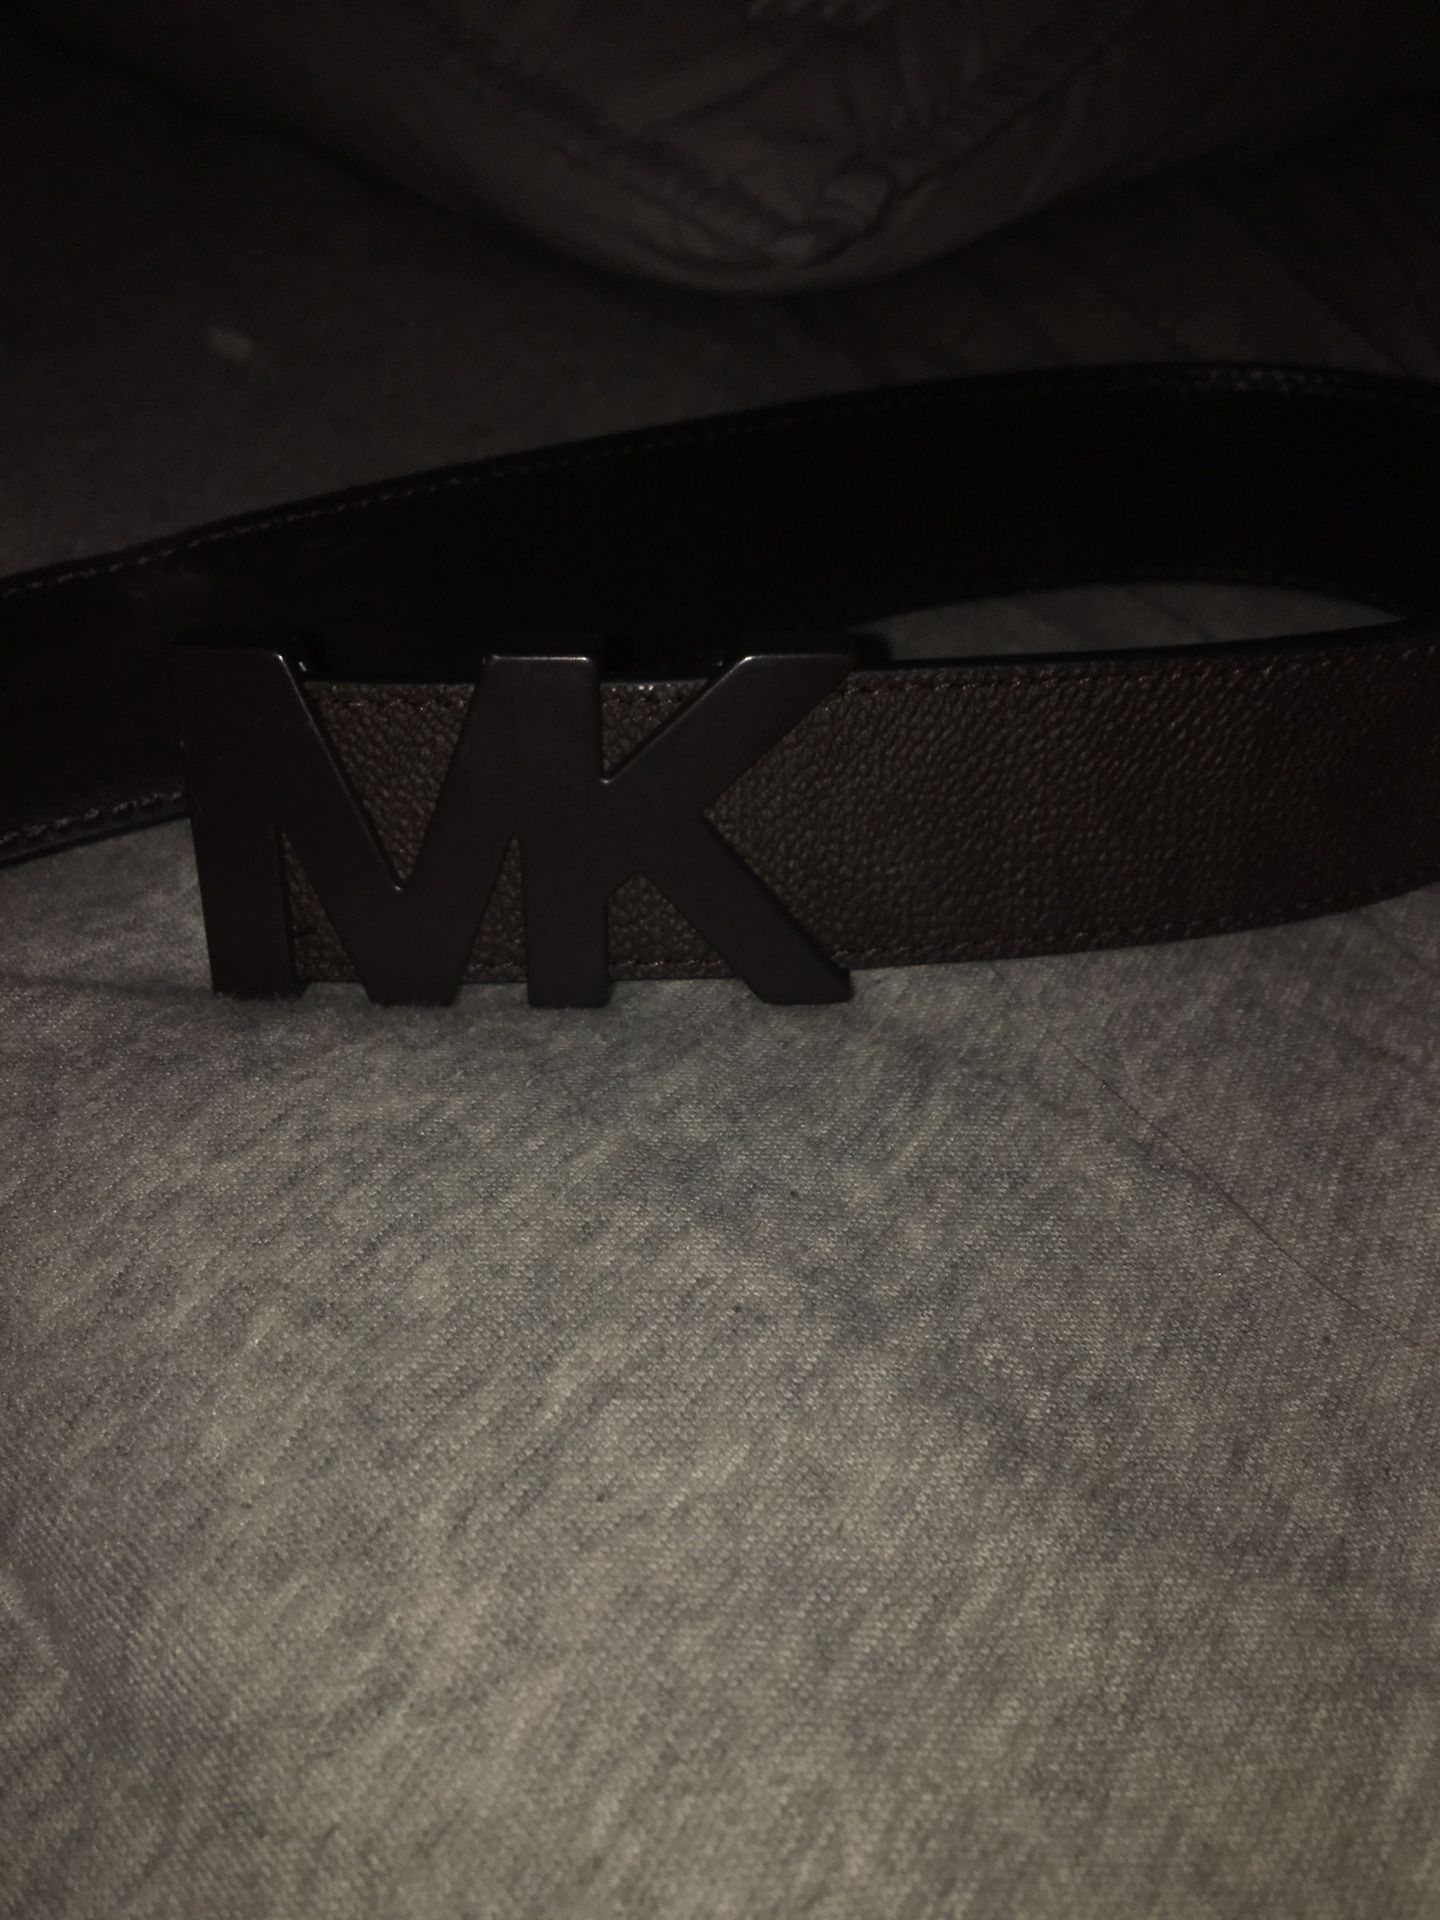 Michael Kors belt